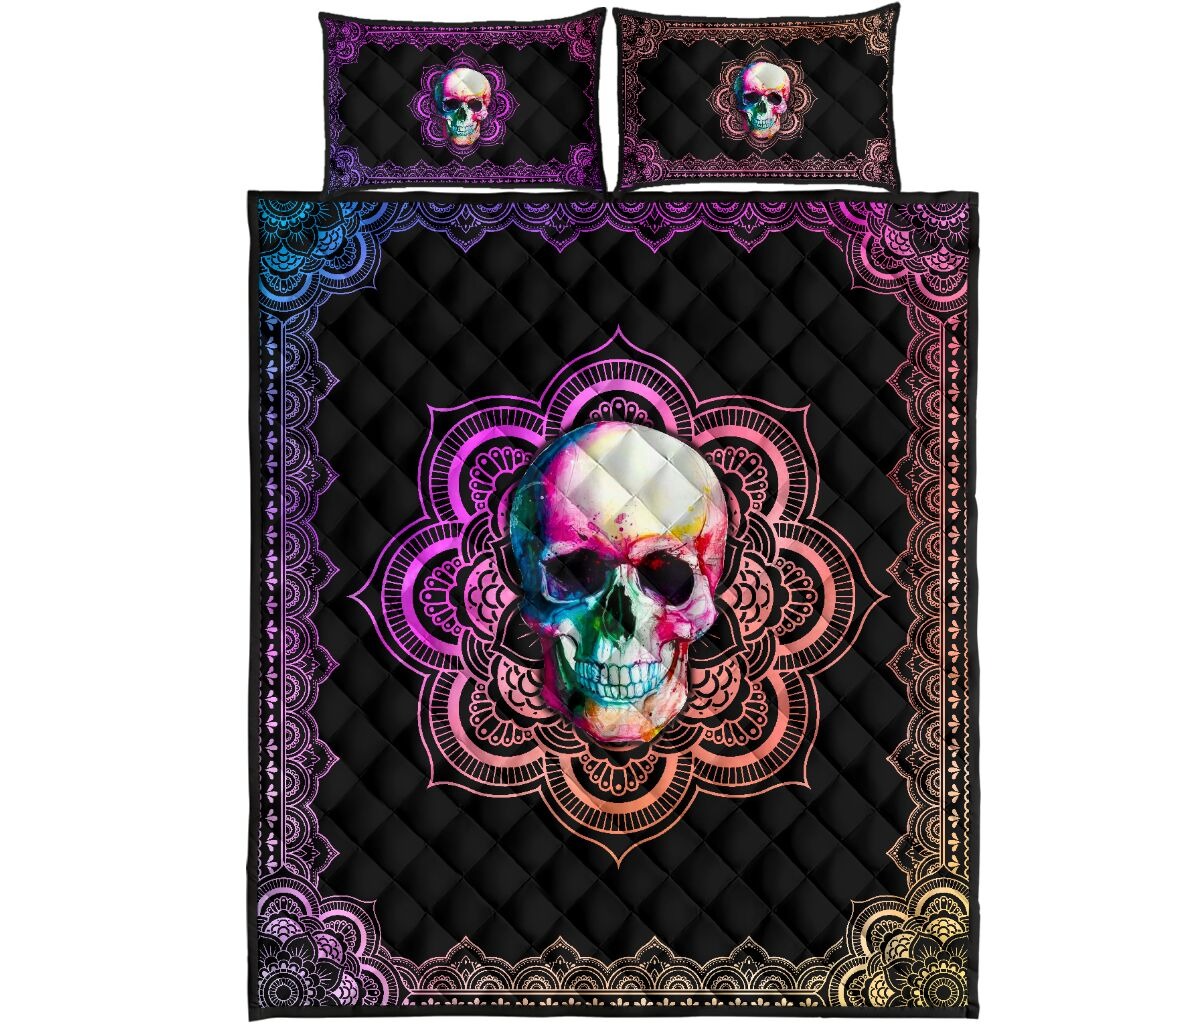 Skull mandala color quilt bedding set 4